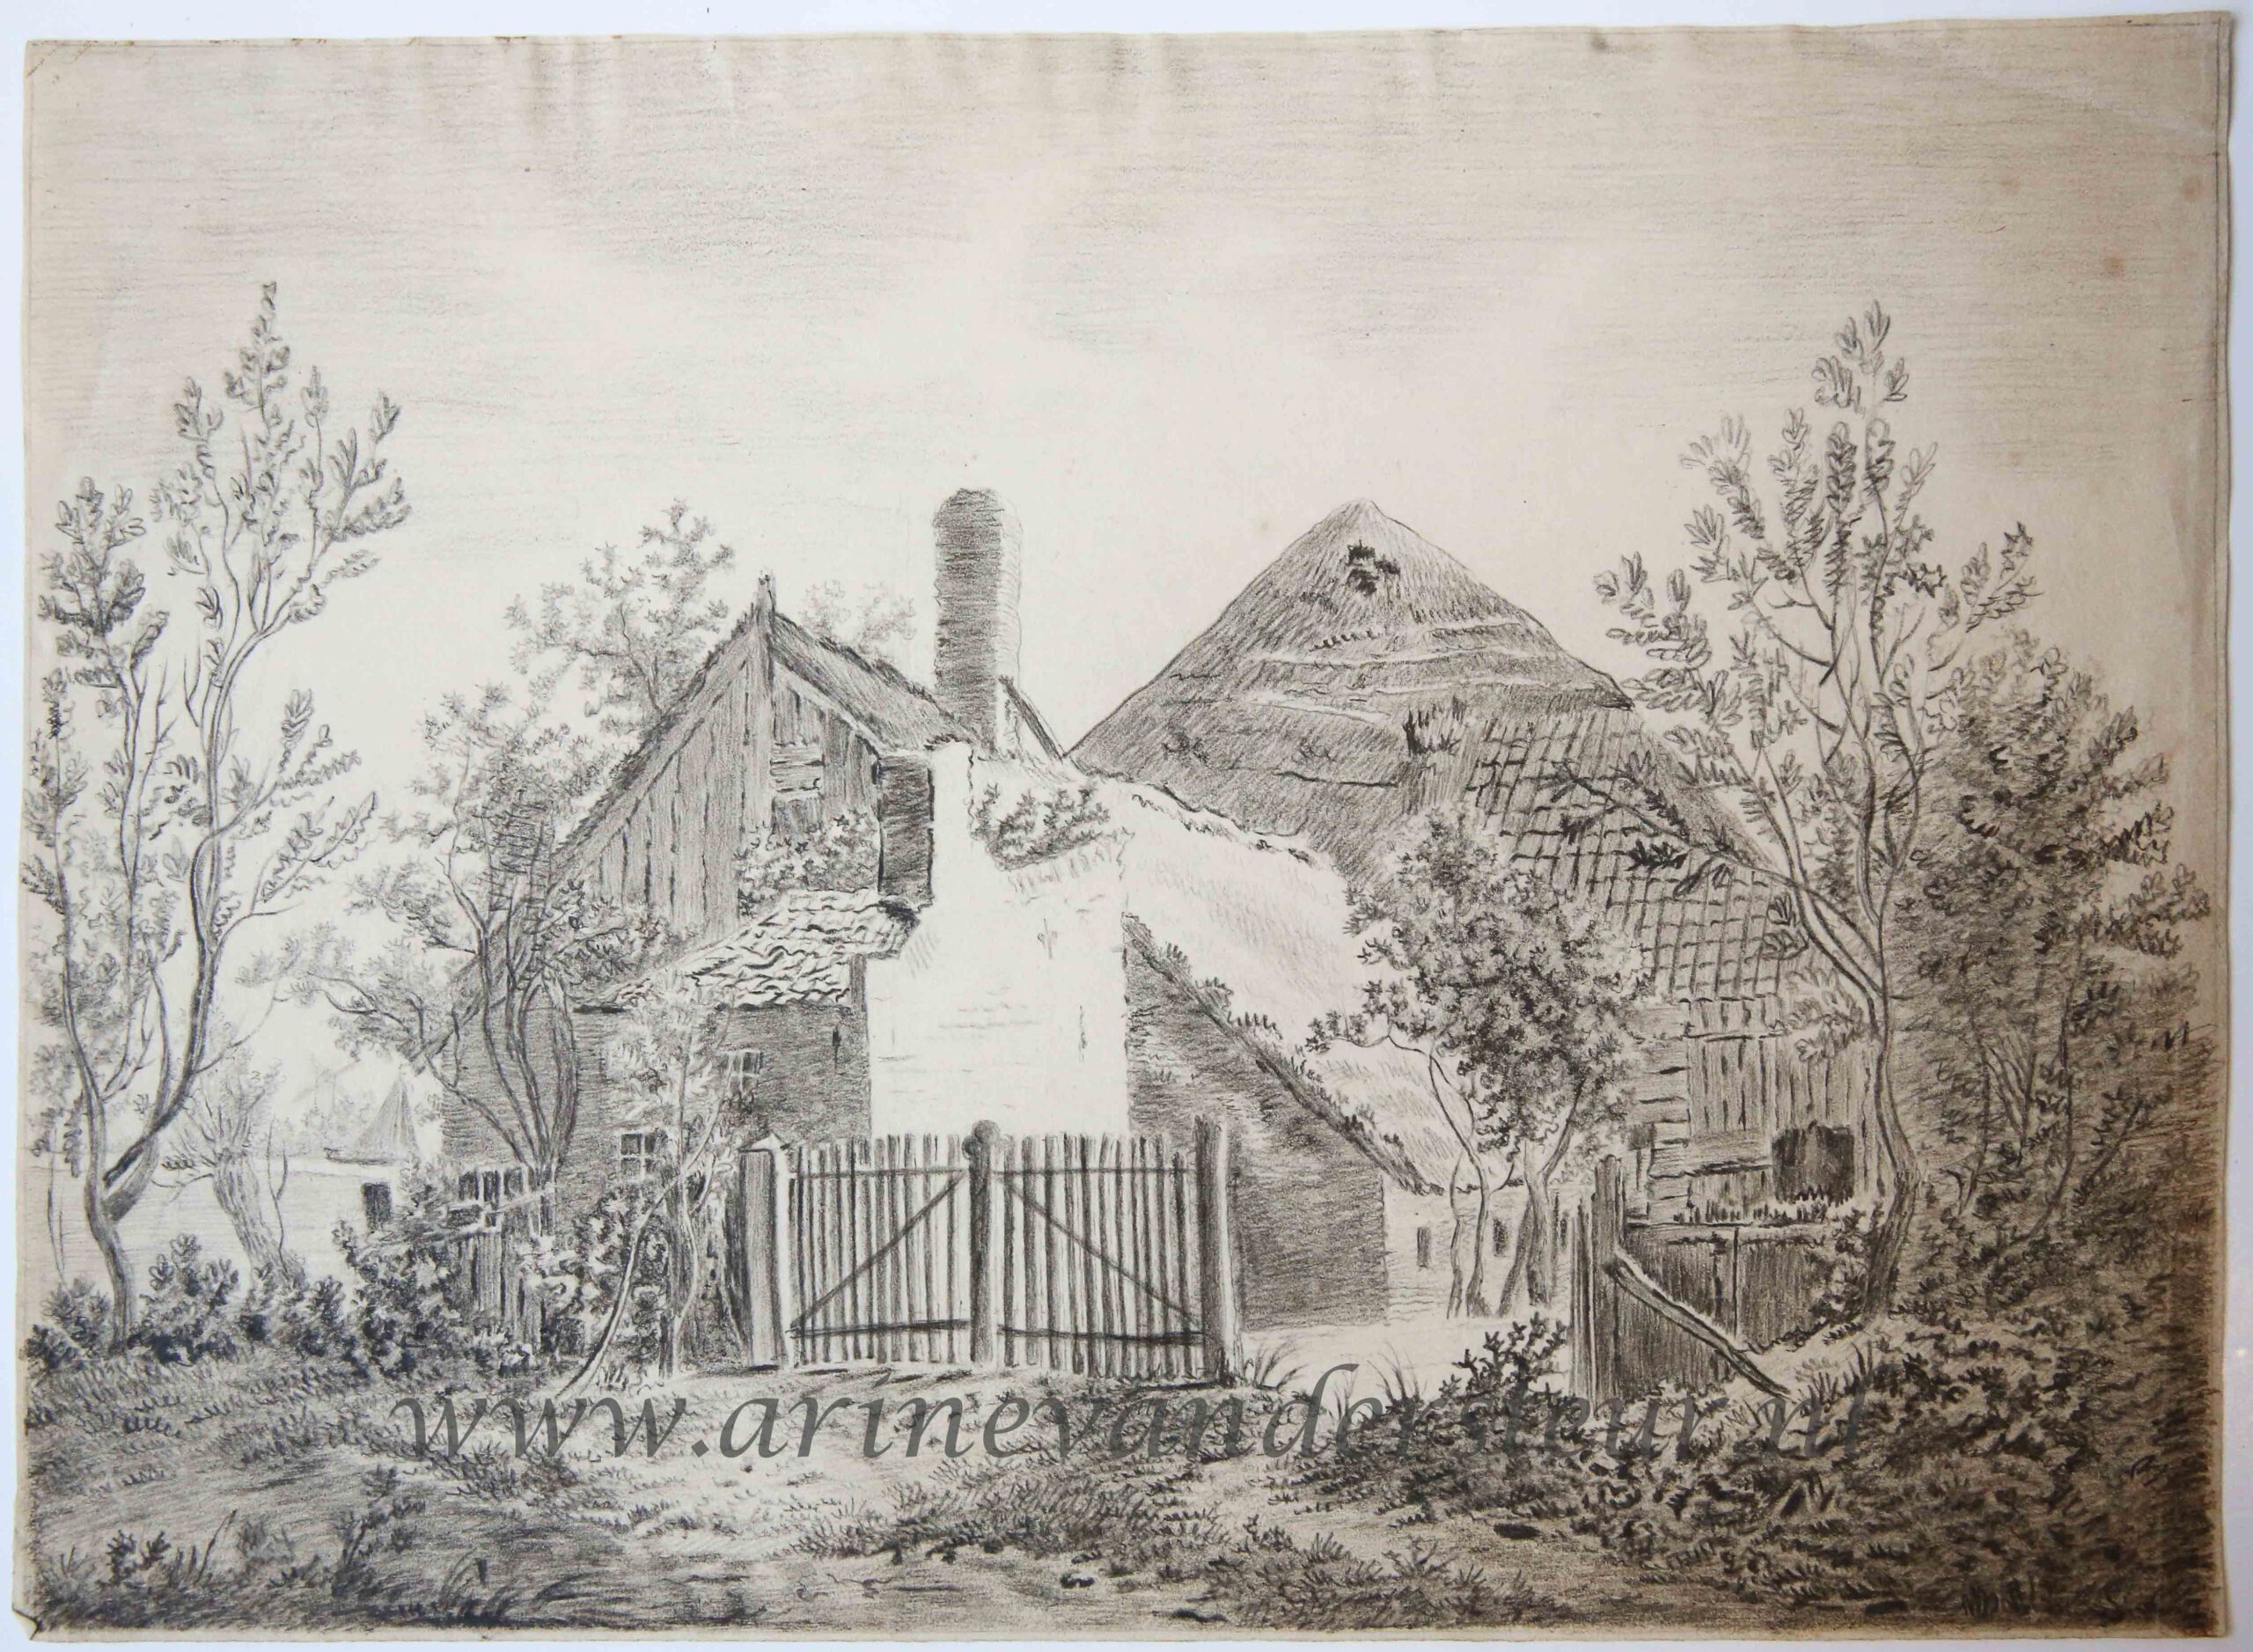 [Antique drawing] A farmer house (boerenhoeve), ca. 1850-1900.